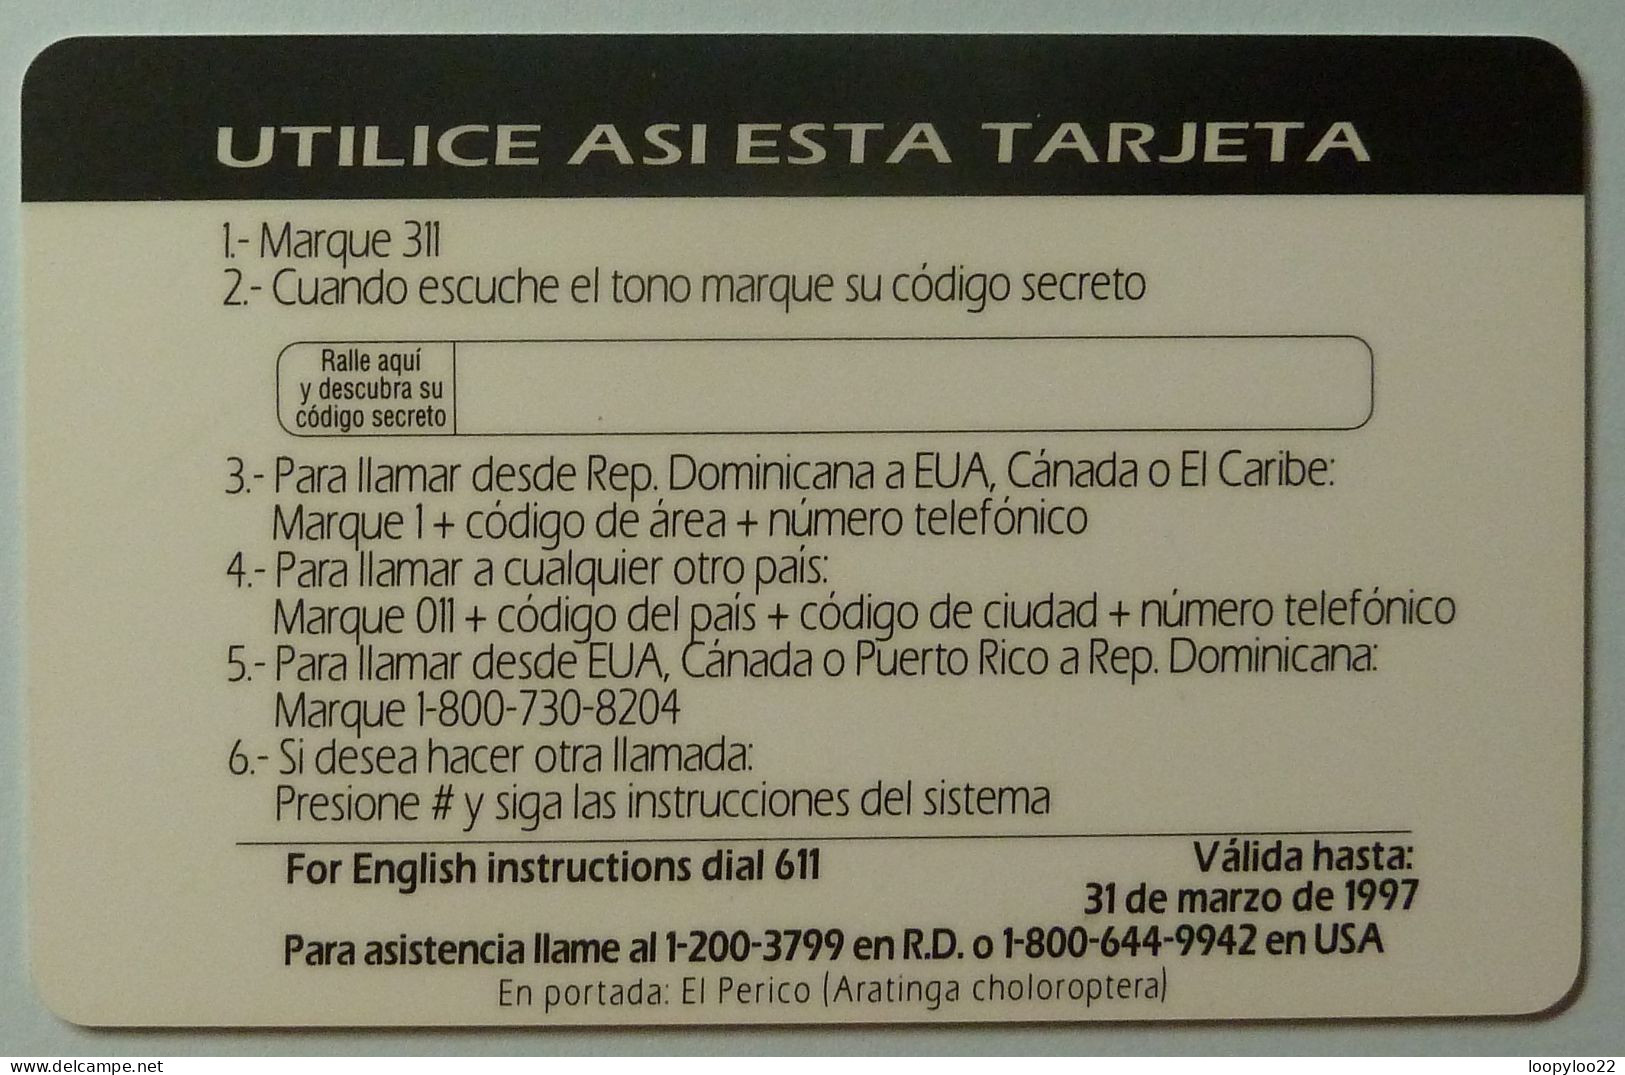 DOMINICAN REPUBLIC / DOMINICANA - Codetel - Remote Memory - Comuni Card - 1997 - $95 - Specimen - Green Parrots - Dominicaanse Republiek